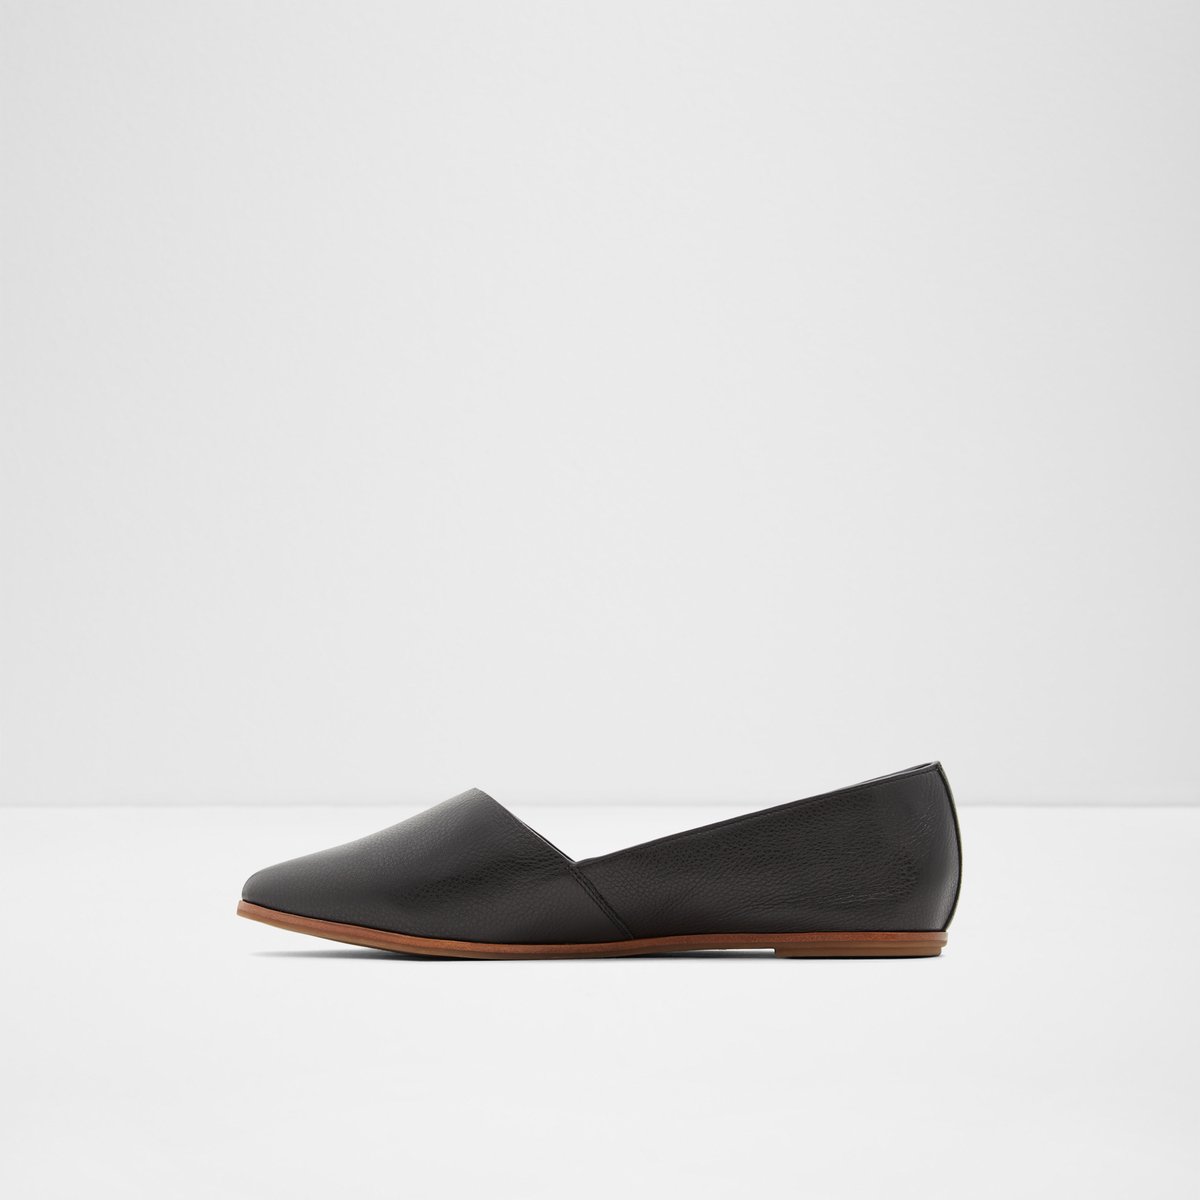 aldo blanchette black leather flat shoes